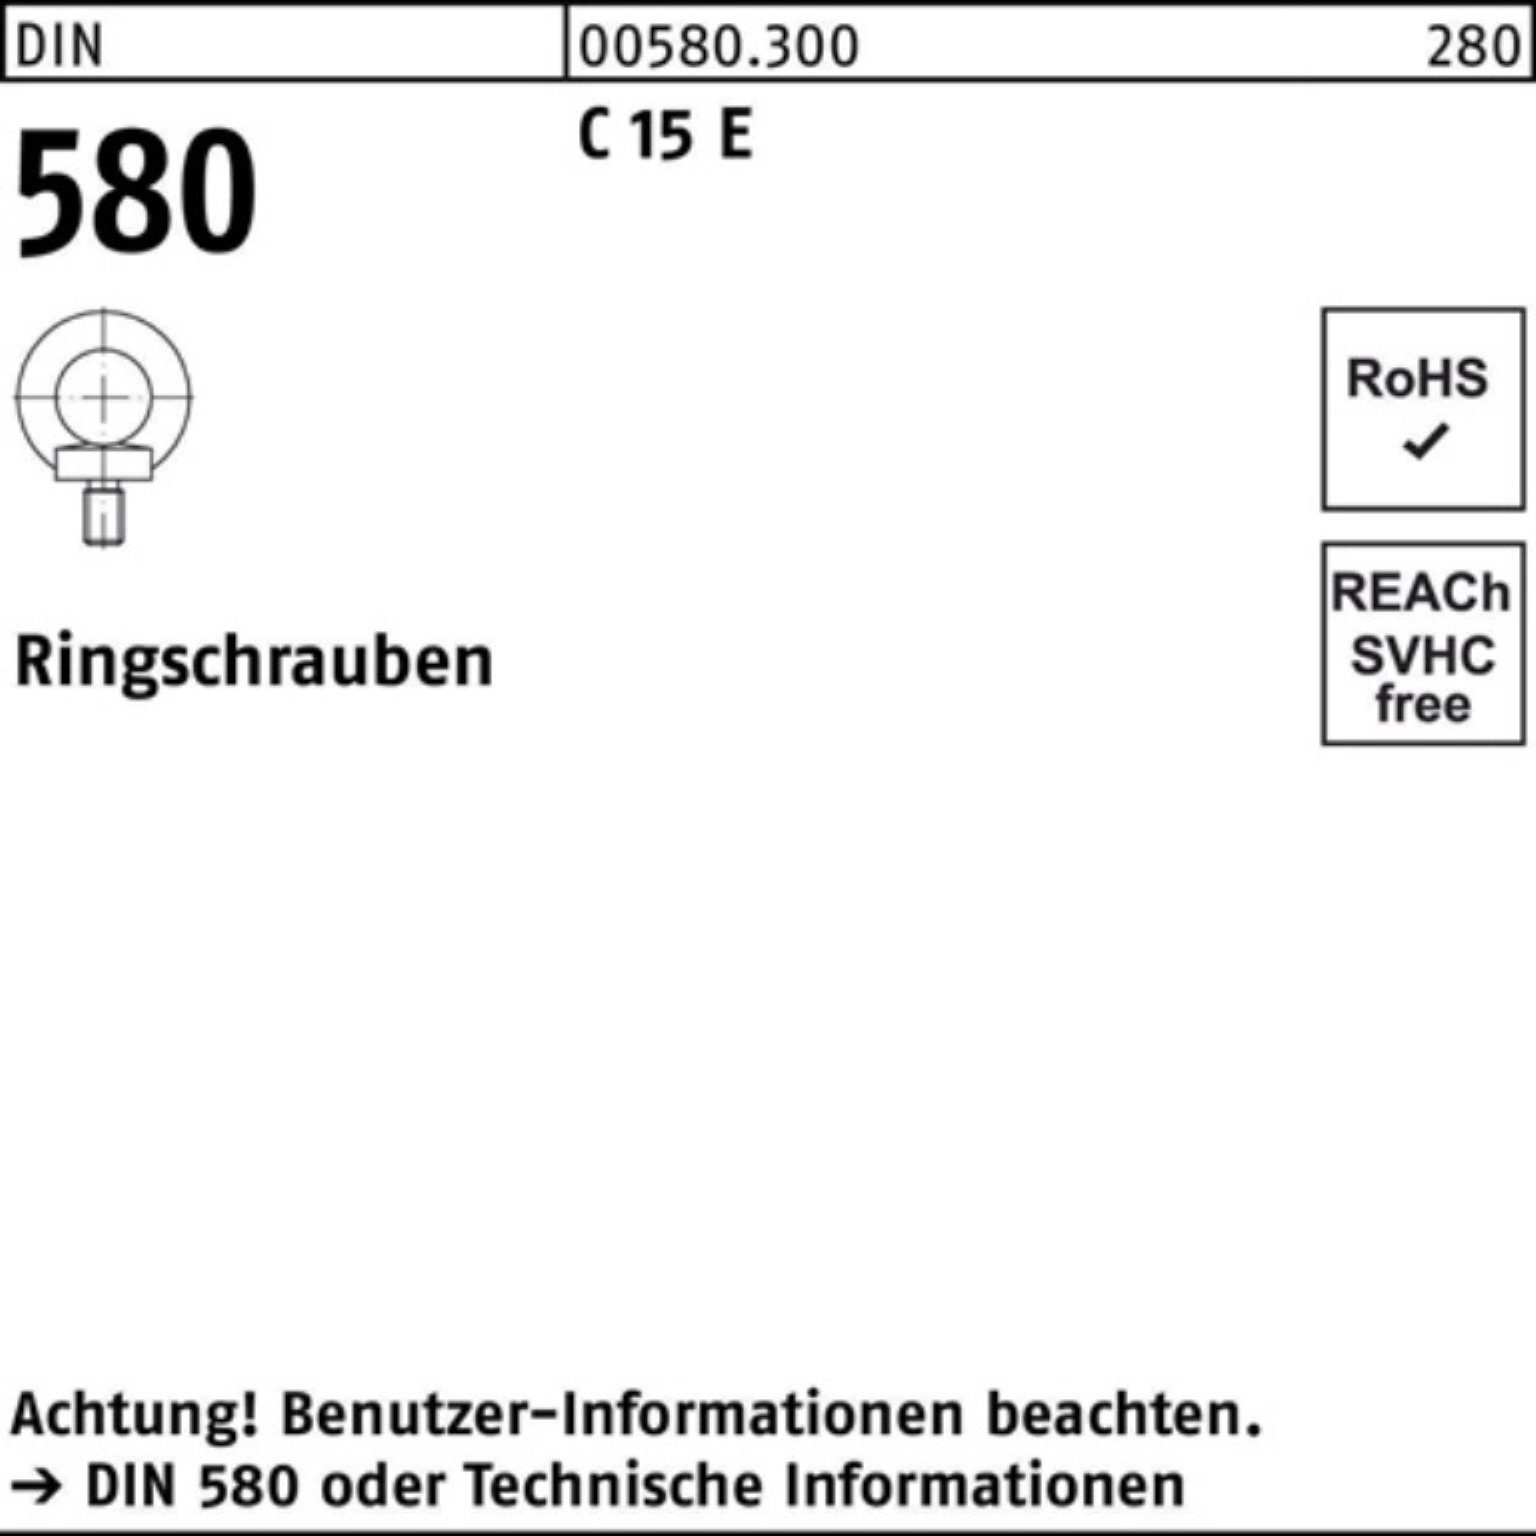 Reyher Schraube 100er Pack Ringschraube DIN 580 M33 C 15 E 1 Stück DIN 580 C 15 E Rin